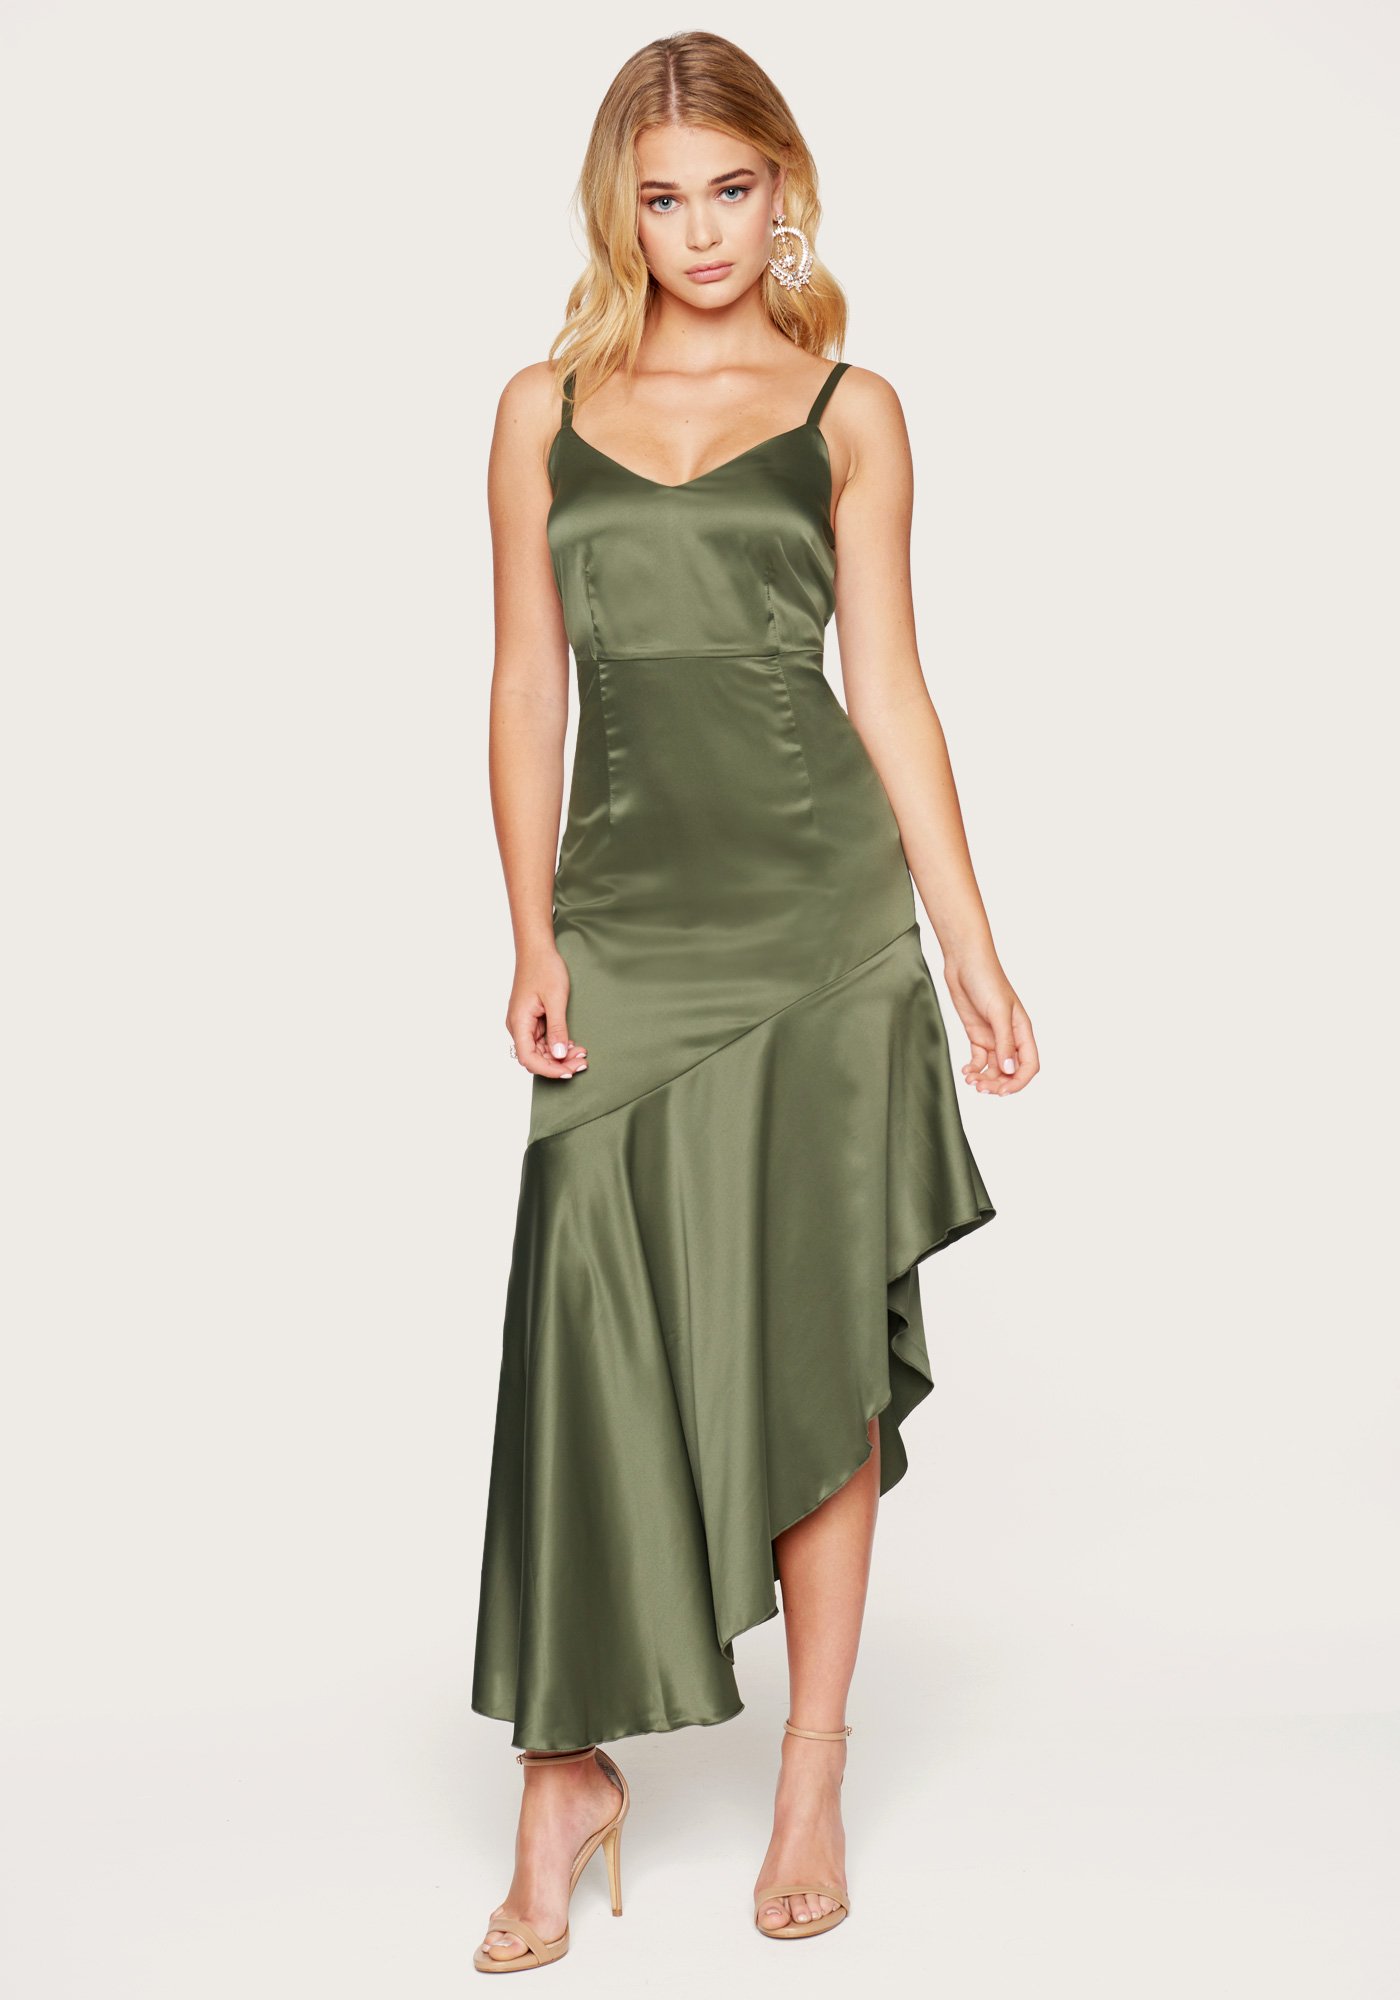 Bebe Women's Angled Ruffle Midi Dress, Size 10 in Dusty Olive Spandex